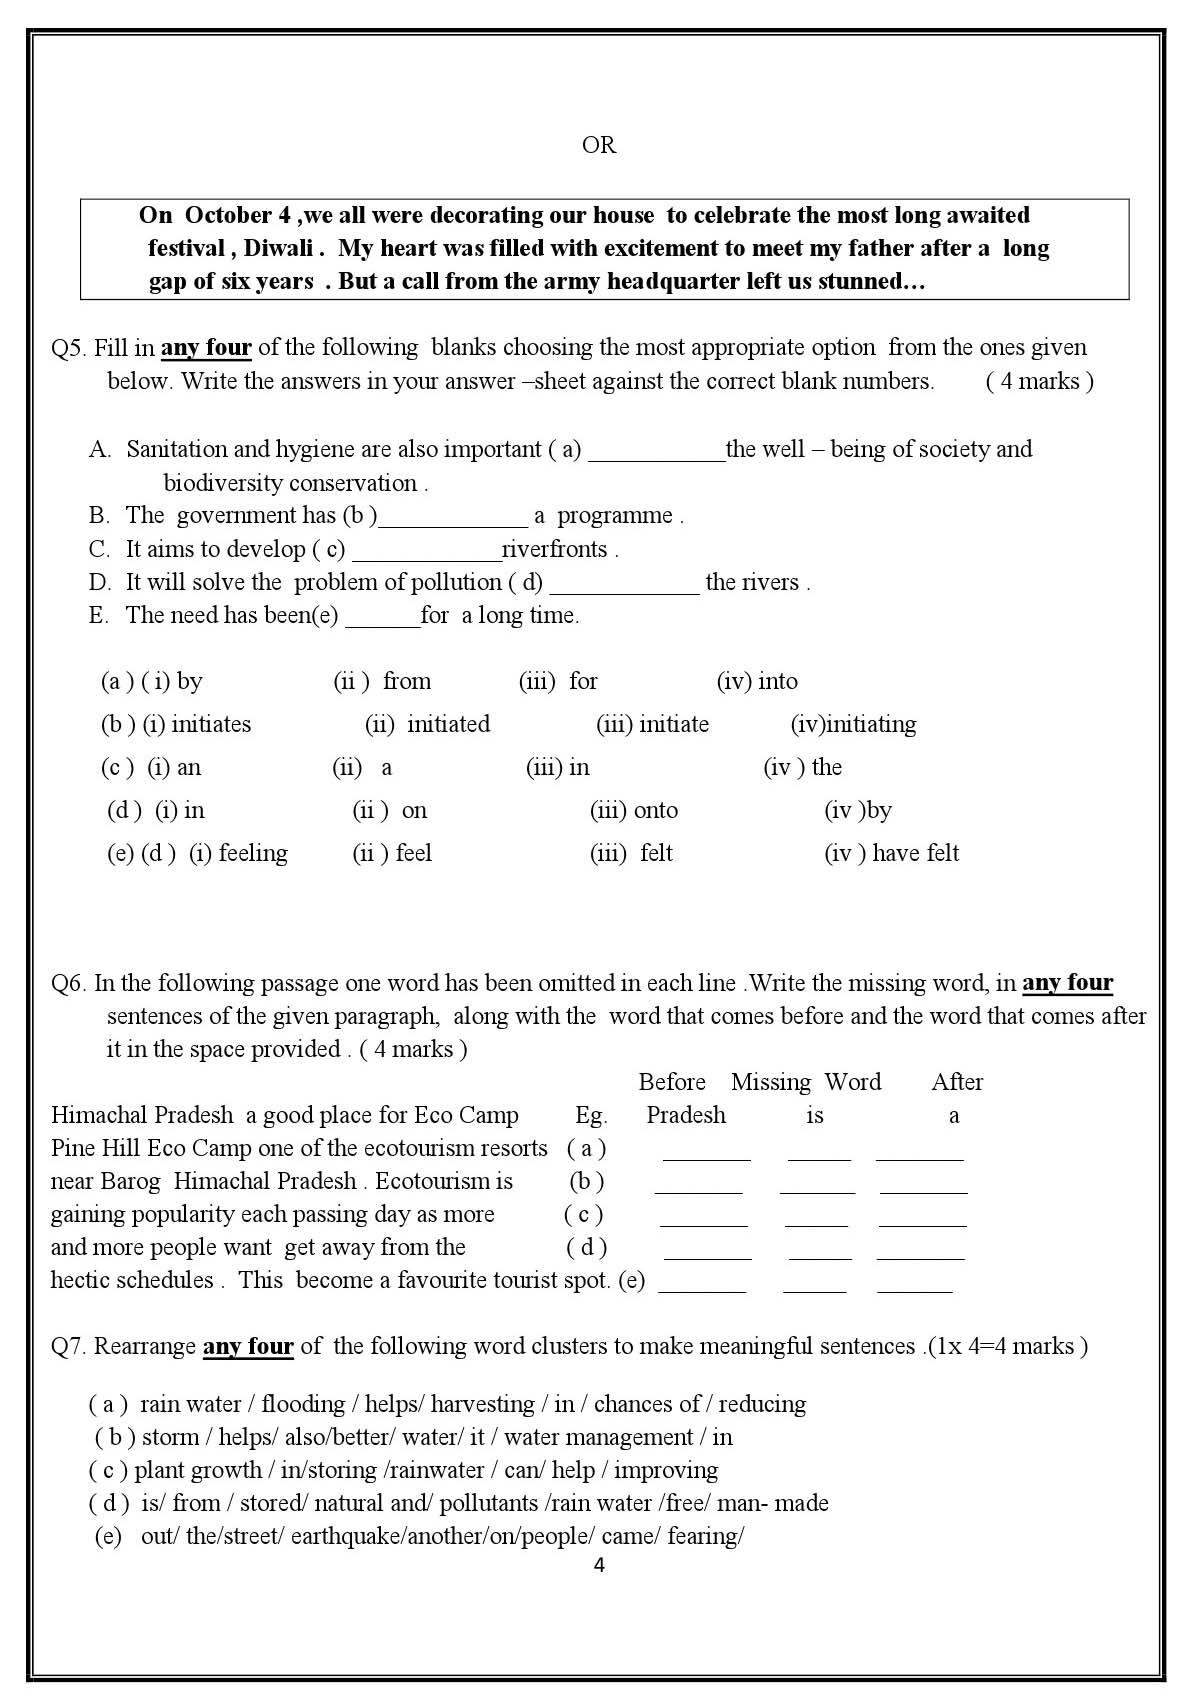 English Communicative CBSE Class X Sample Question Paper 2017 18 - Image 4